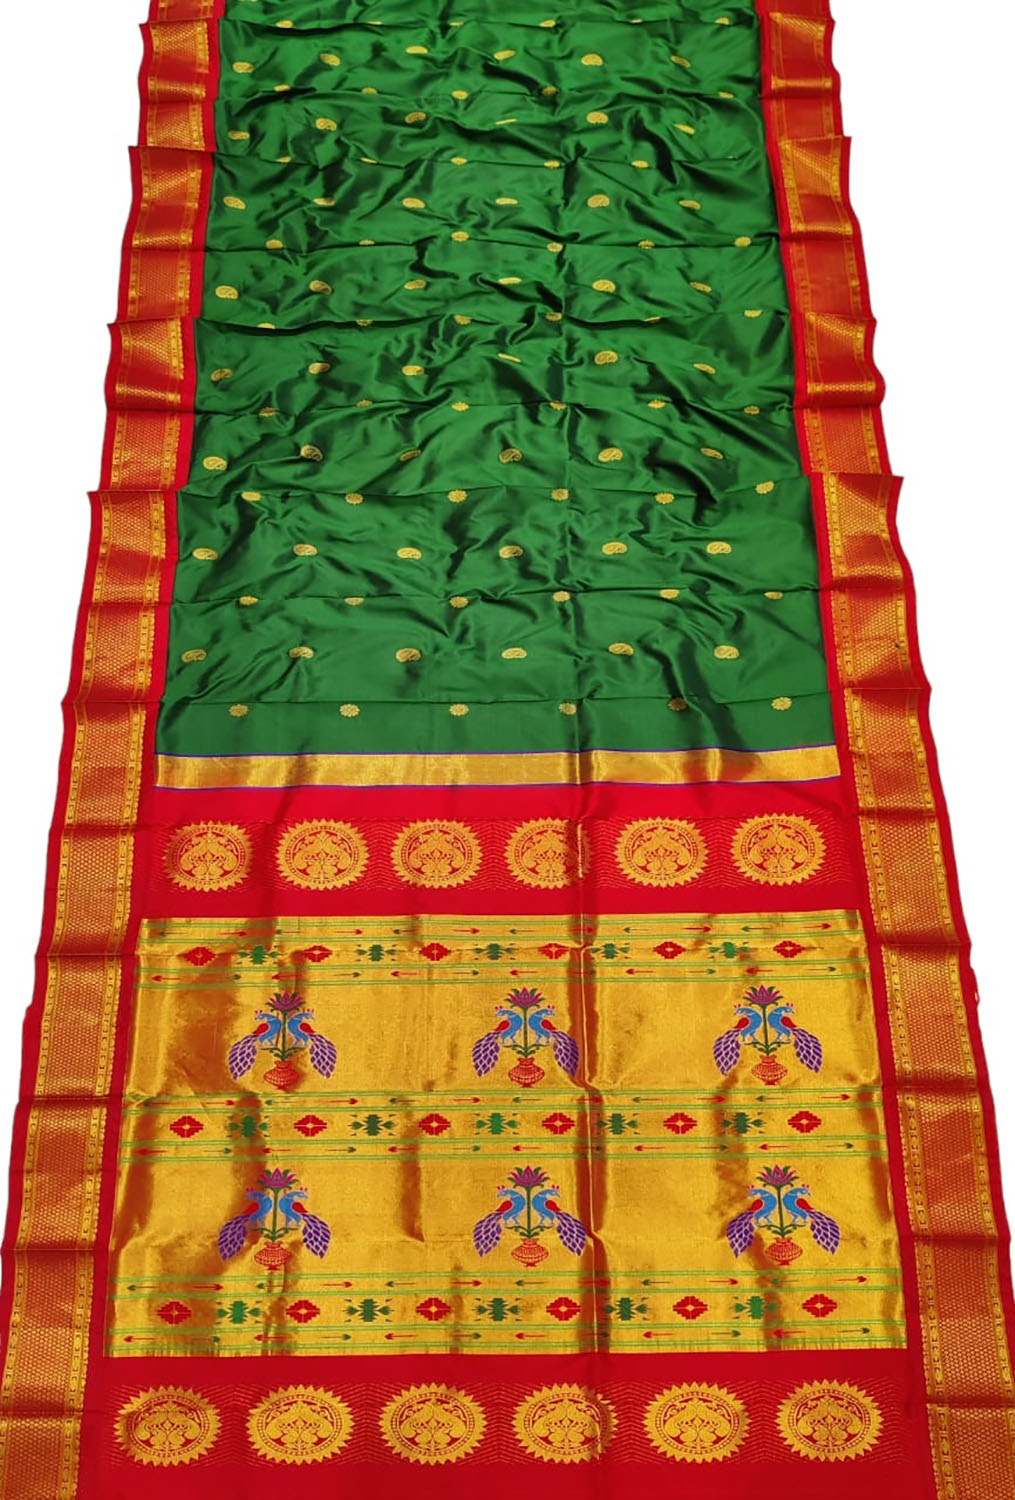 Handloom Silk Peacock Saree - Green and Red Paithani Design - Luxurion World